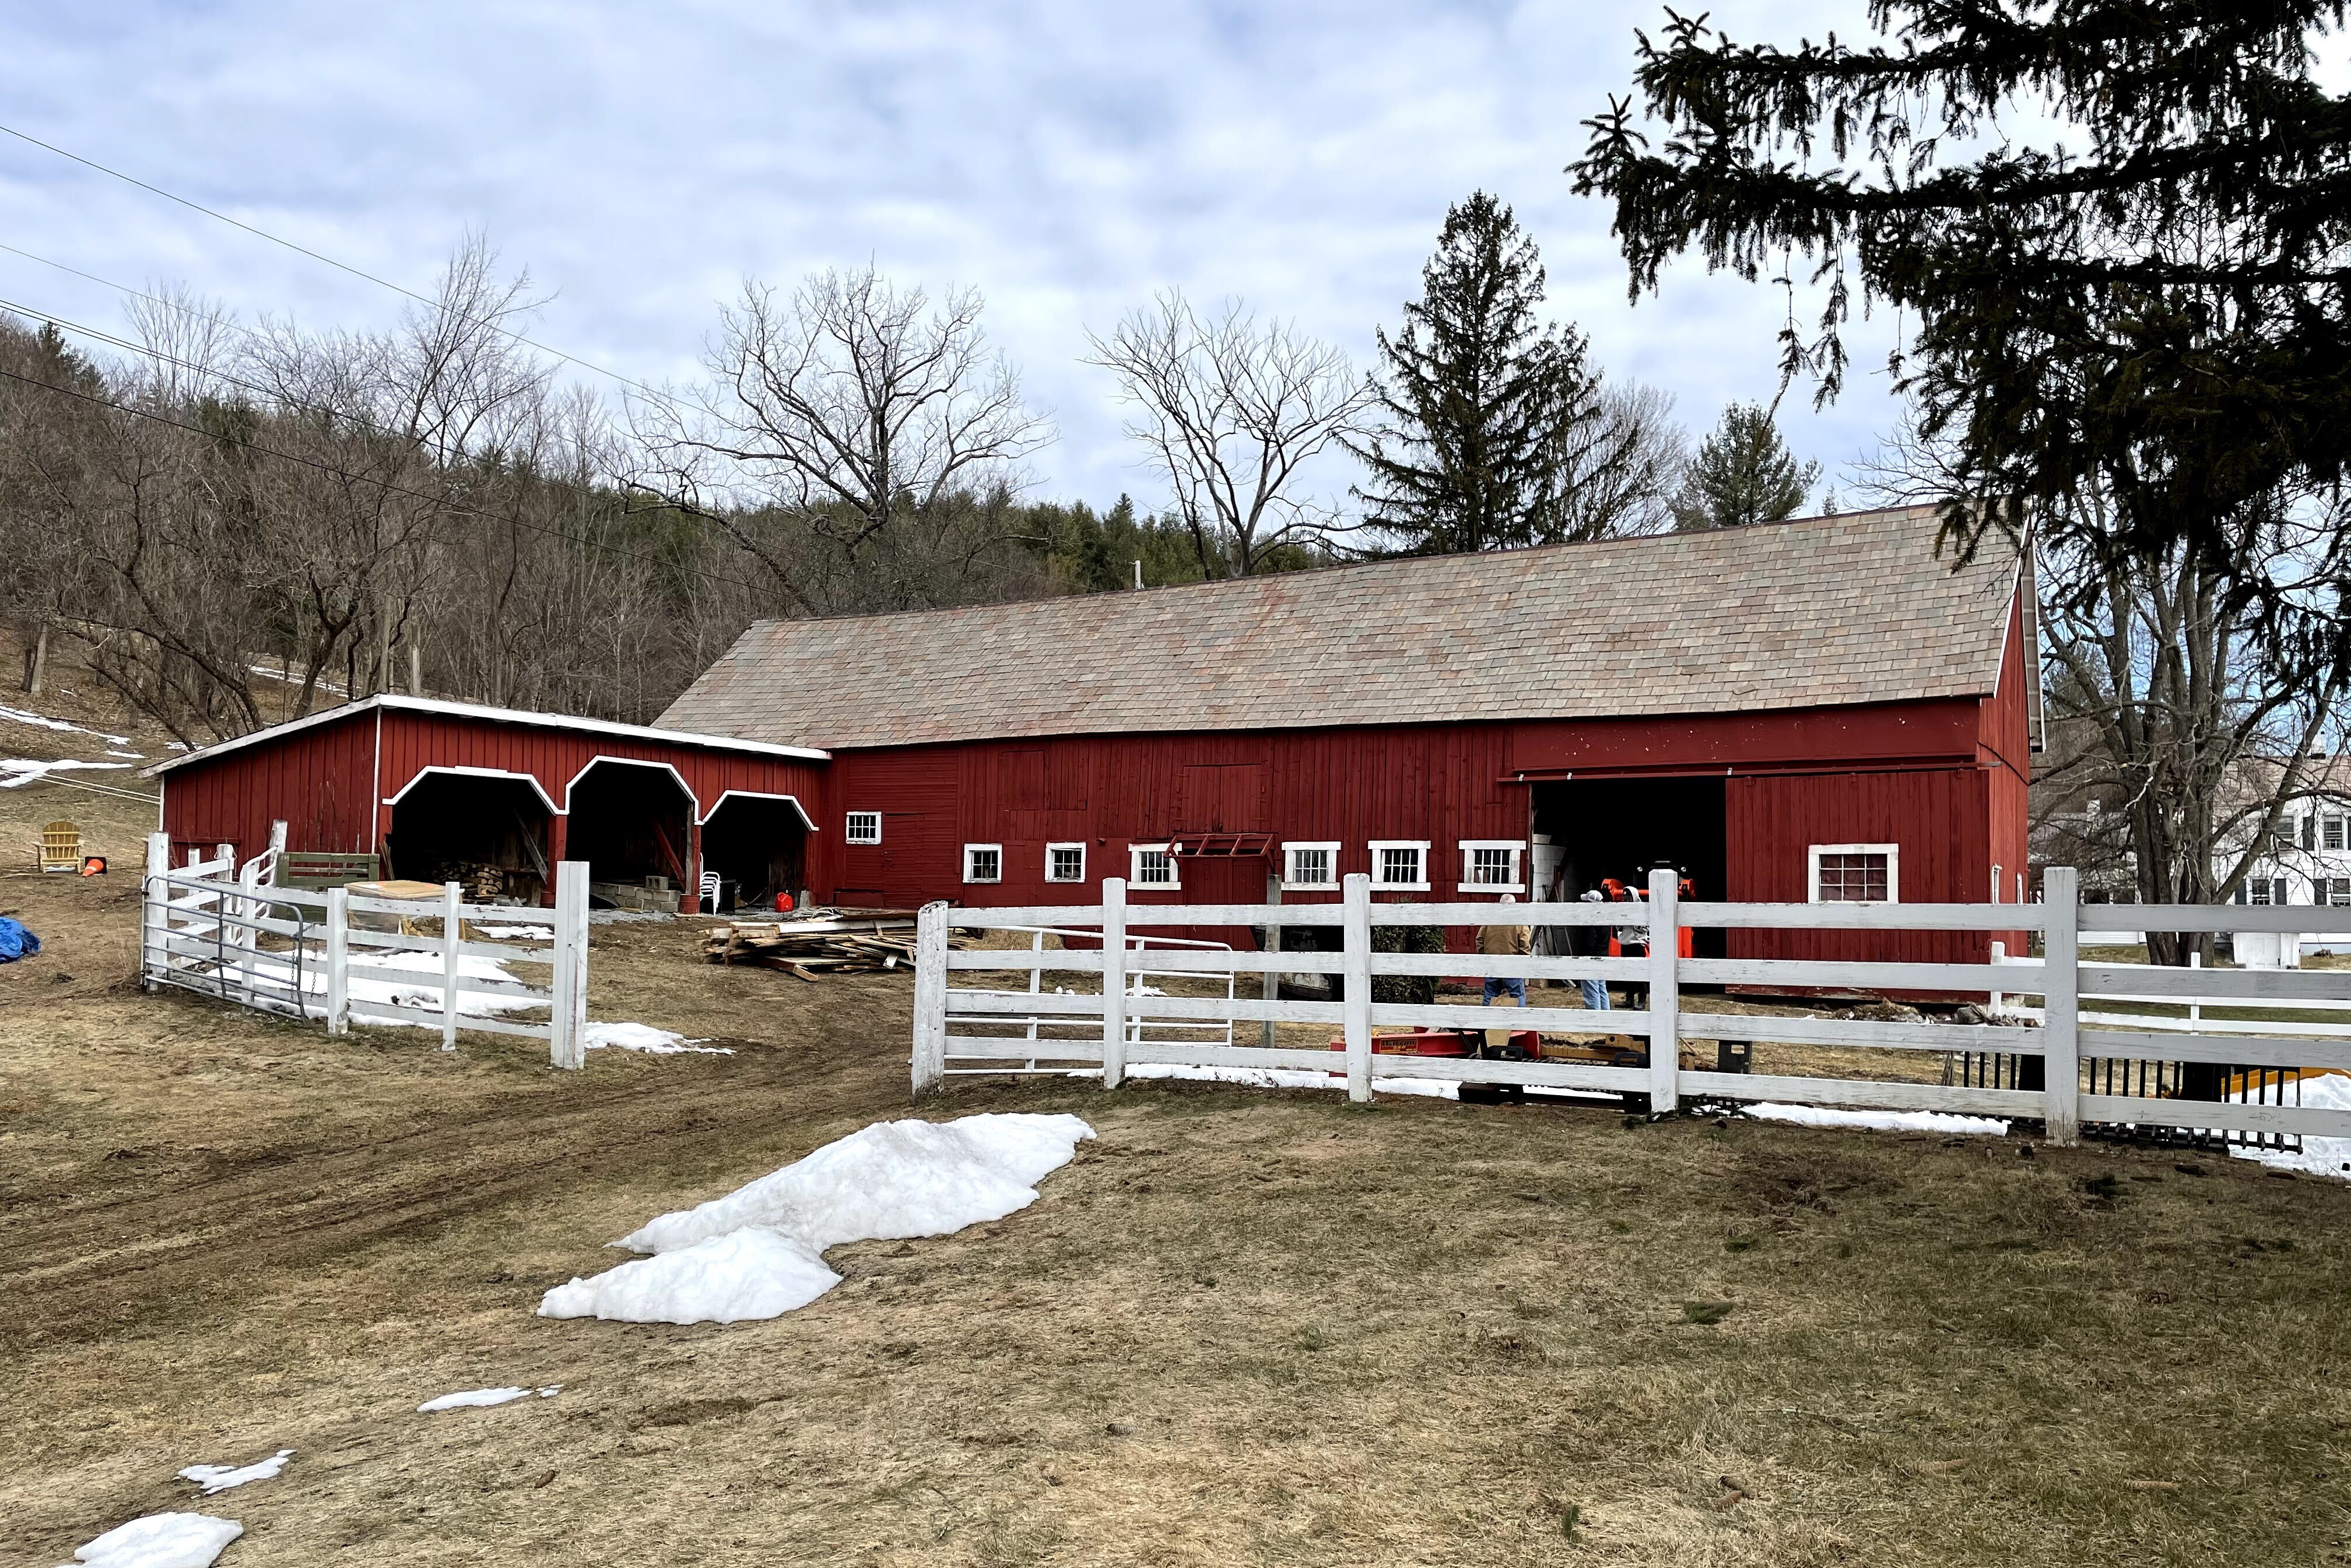 Engel Historic Barn